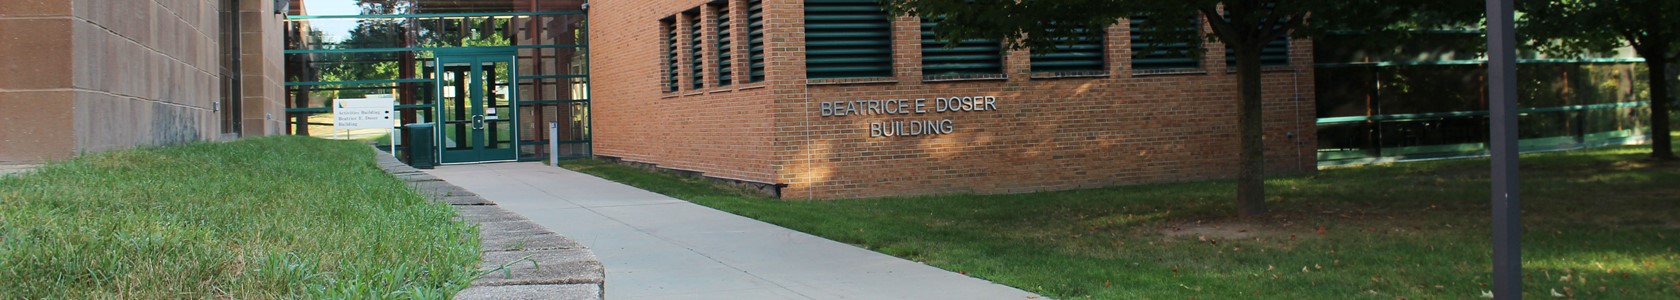 MCC's Sidney campus, Beatrice E. Doser Building